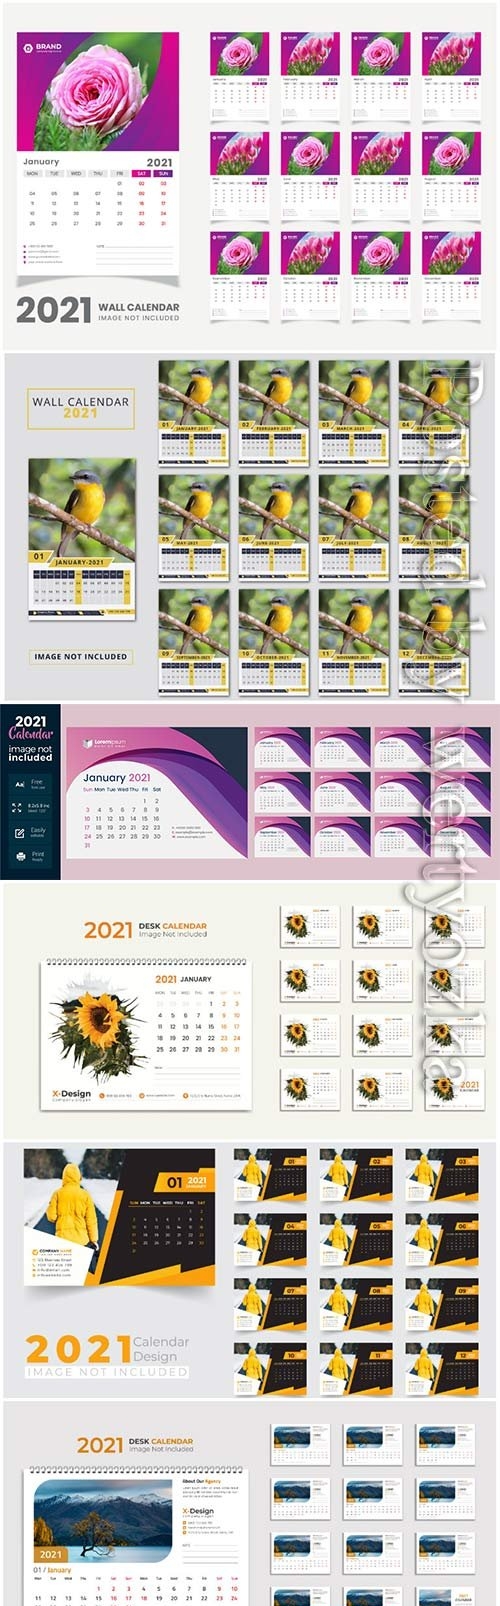 Desk calendar 2021 template design for new year vol 5